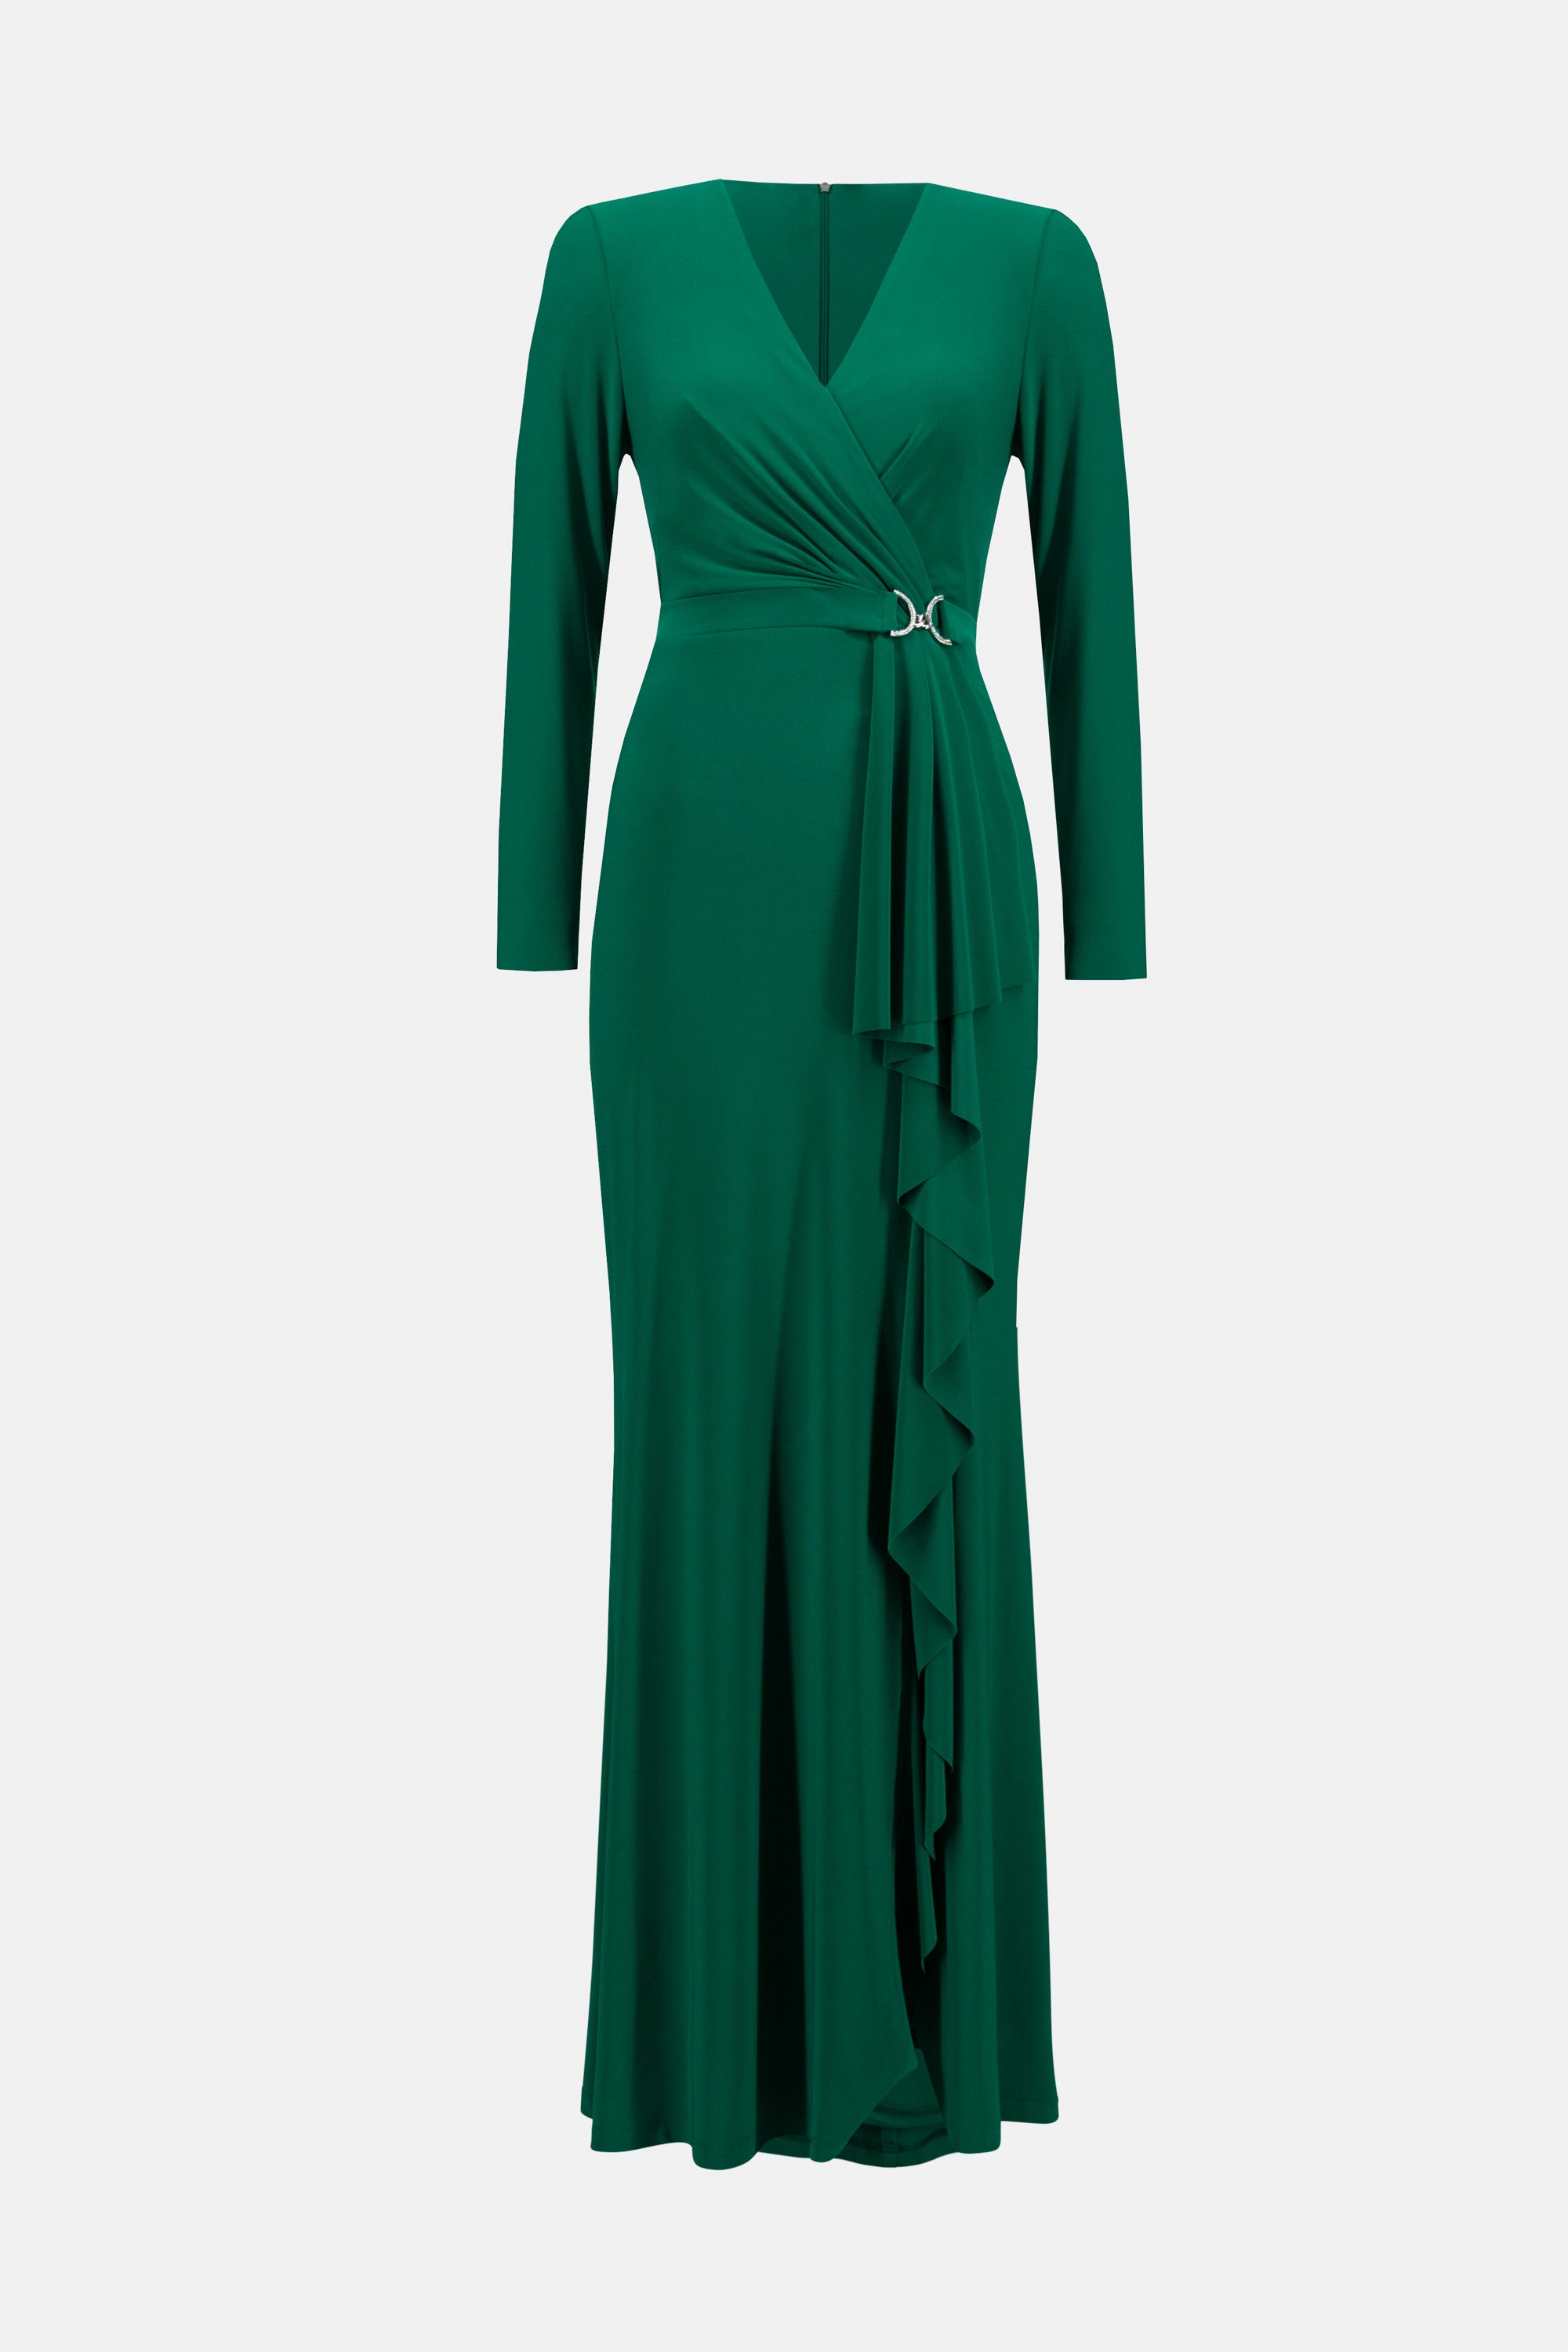 Joseph Ribkoff Fall 2023 - 233788 -Dress-True Emerald